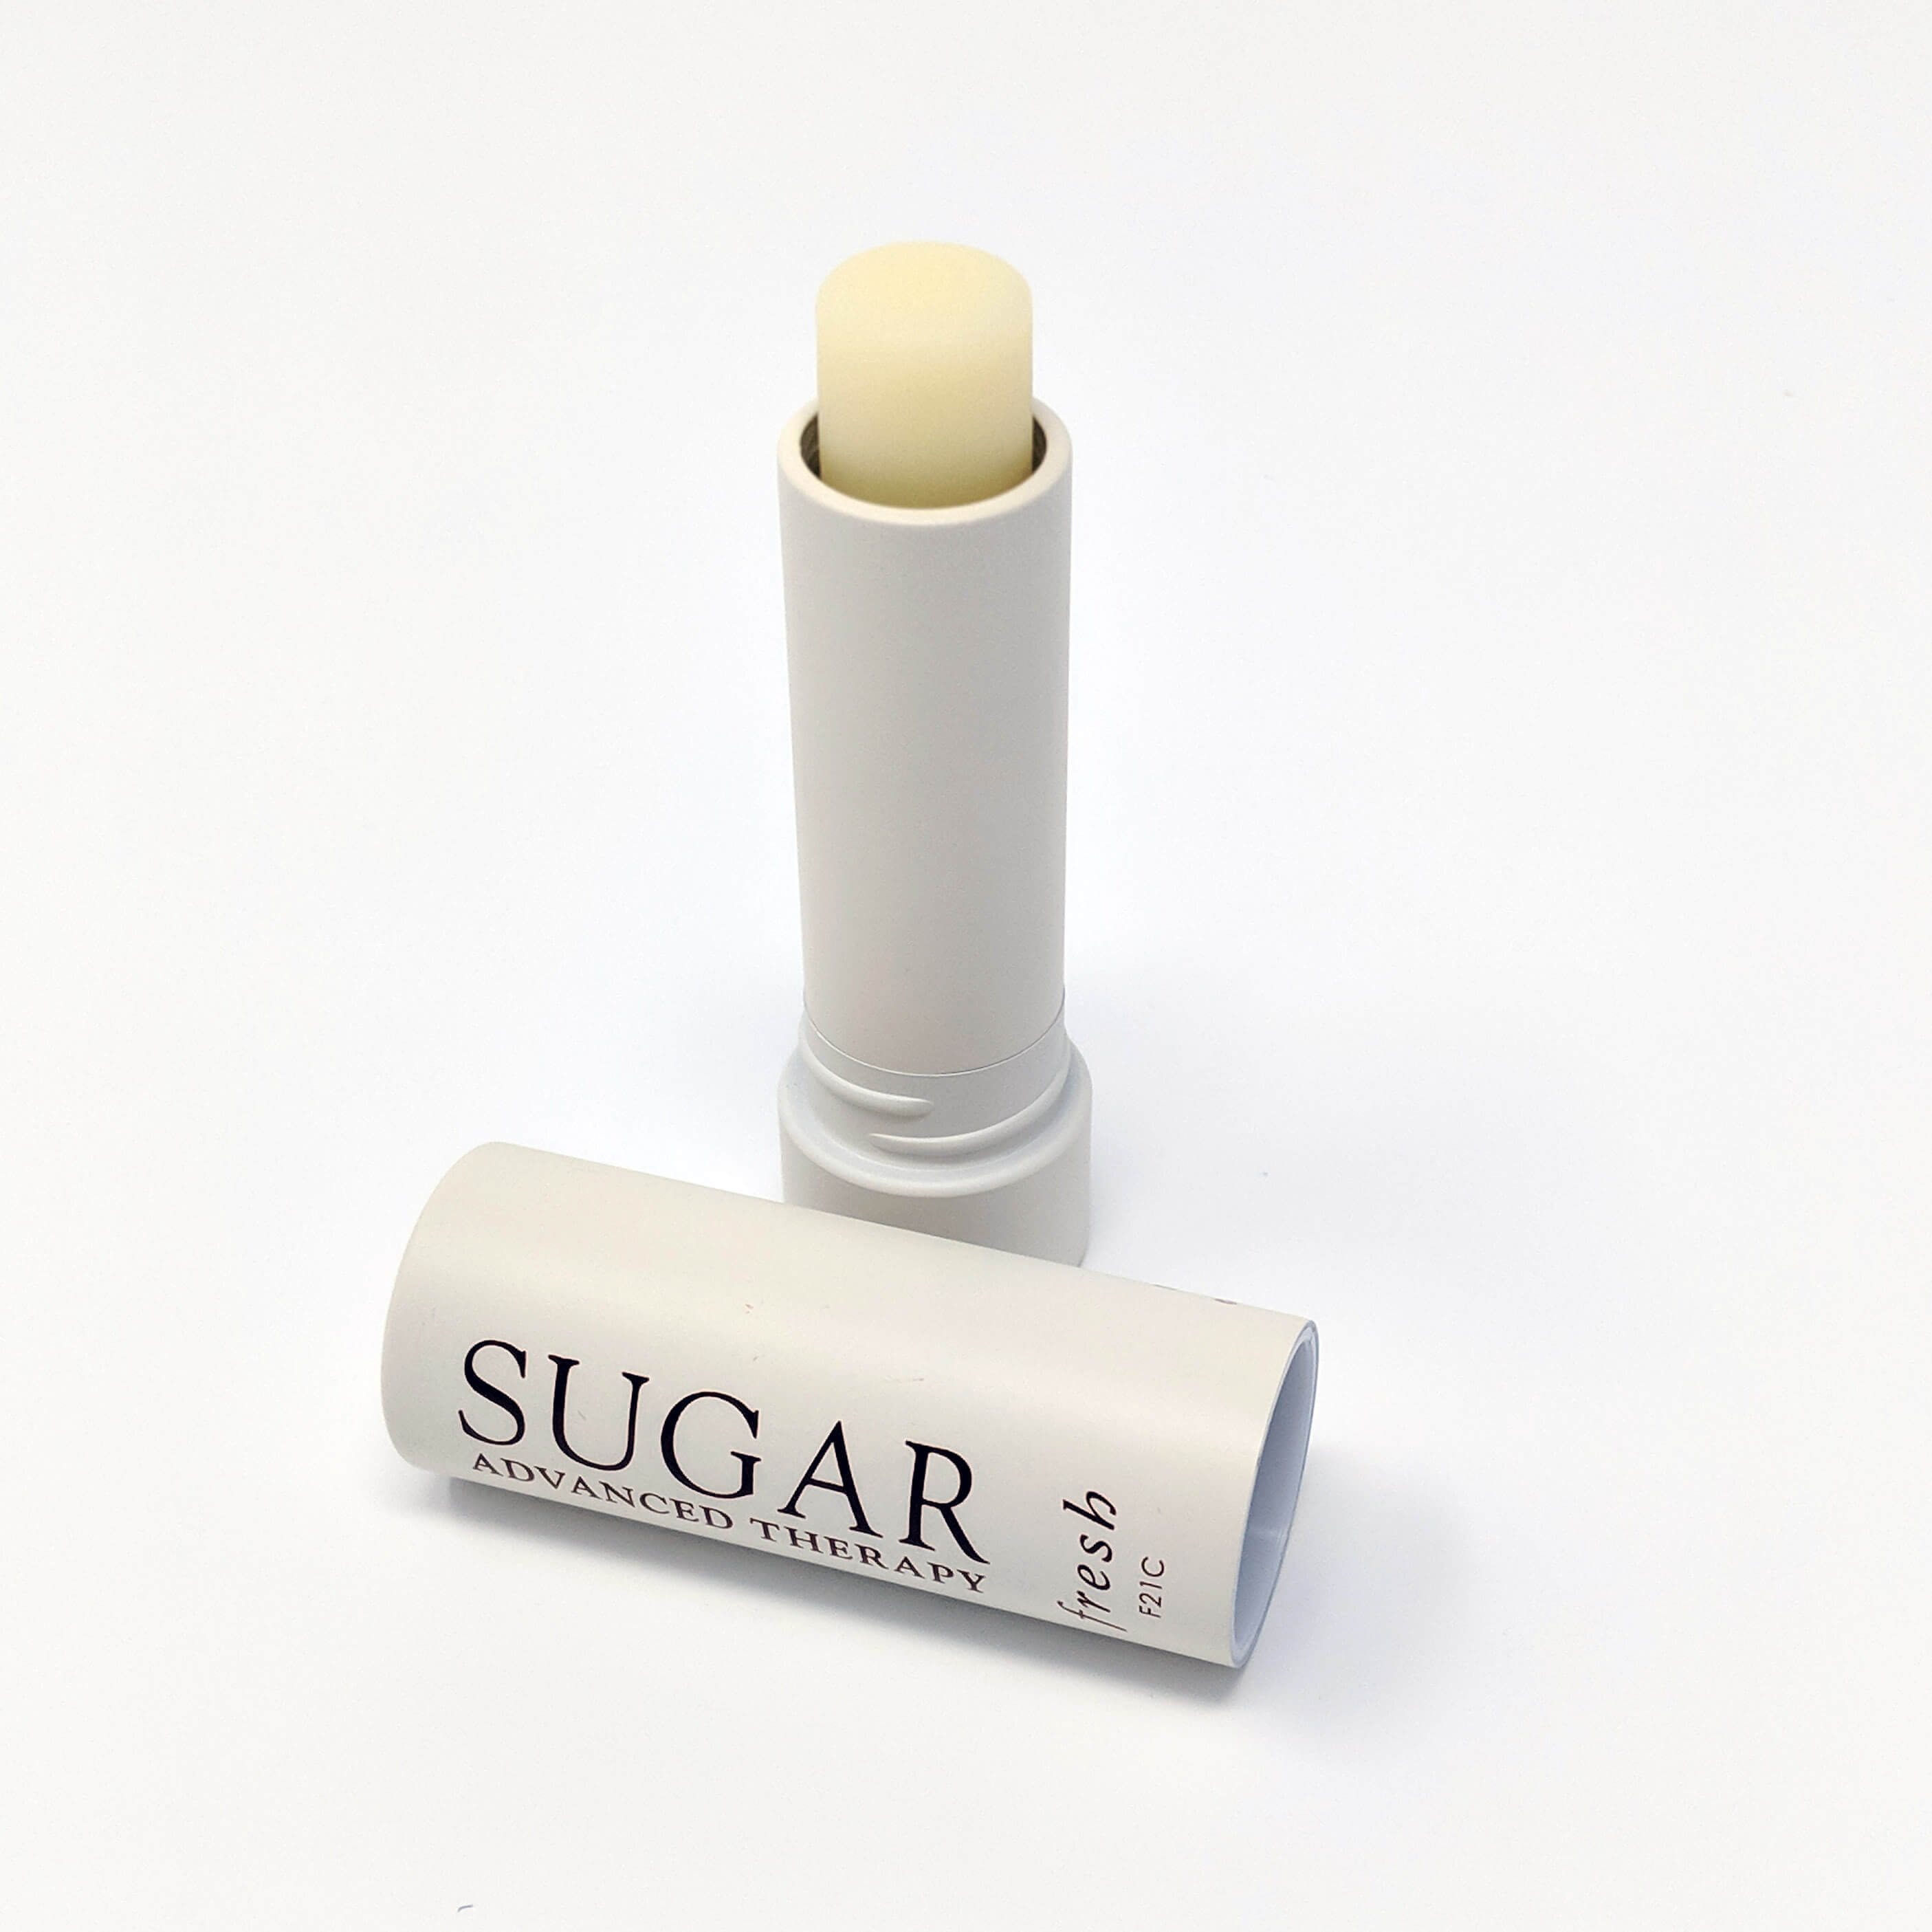 Fresh Sugar Lip Treatment Advanced Therapy 2.2g ลิปทรีตเม้นท์ที่ช่วยต่อต้านริ้วรอยบนริมฝีปาก ด้วยสารสกัดจากส้ม บัตเตอร์ Cupuacu น้ำมันเมล็ดพลัม และน้ำมันเสาวรส อุดมไปด้วย Hyaluronic Filling Spheres ที่ช่วยเพิ่มความอวบอิ่มให้เรียวปาก เนียนนุุ่มชุ่มชื่น ต่อต้านริ้วรอยบนริมฝีปาก